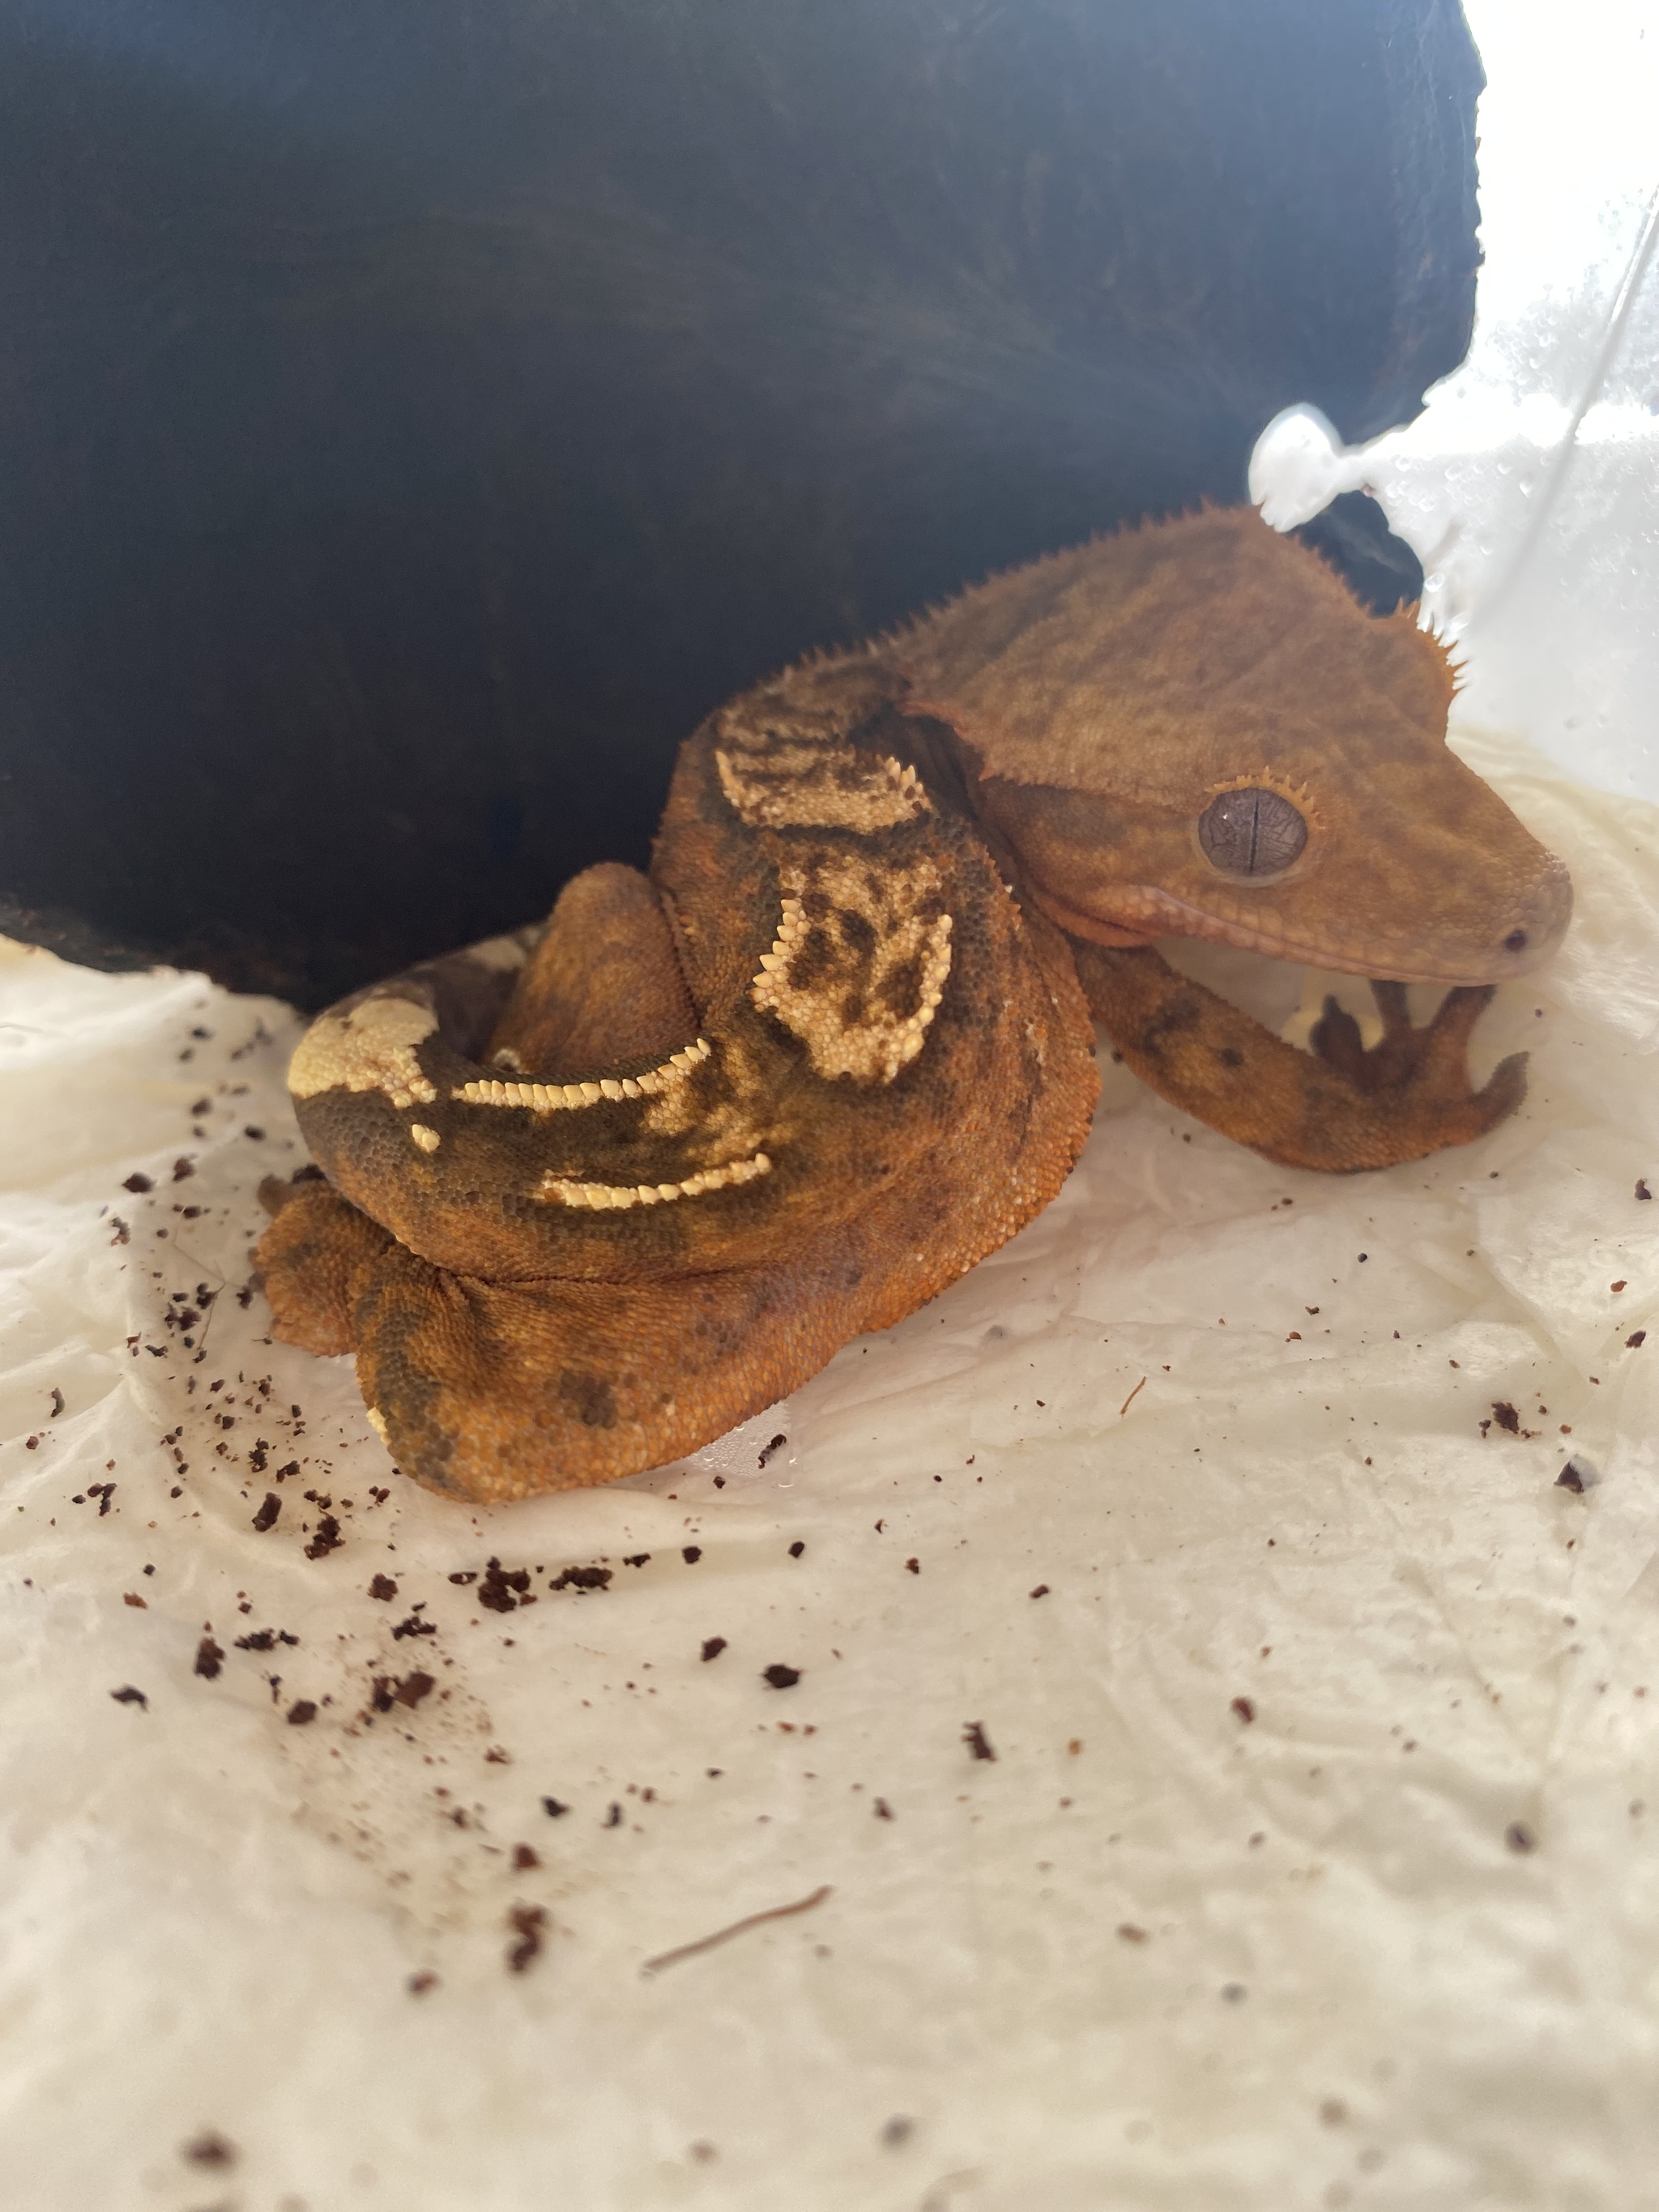 peekaboo educational - Reptiles at home, Gecko, Pets, Terrariumistics